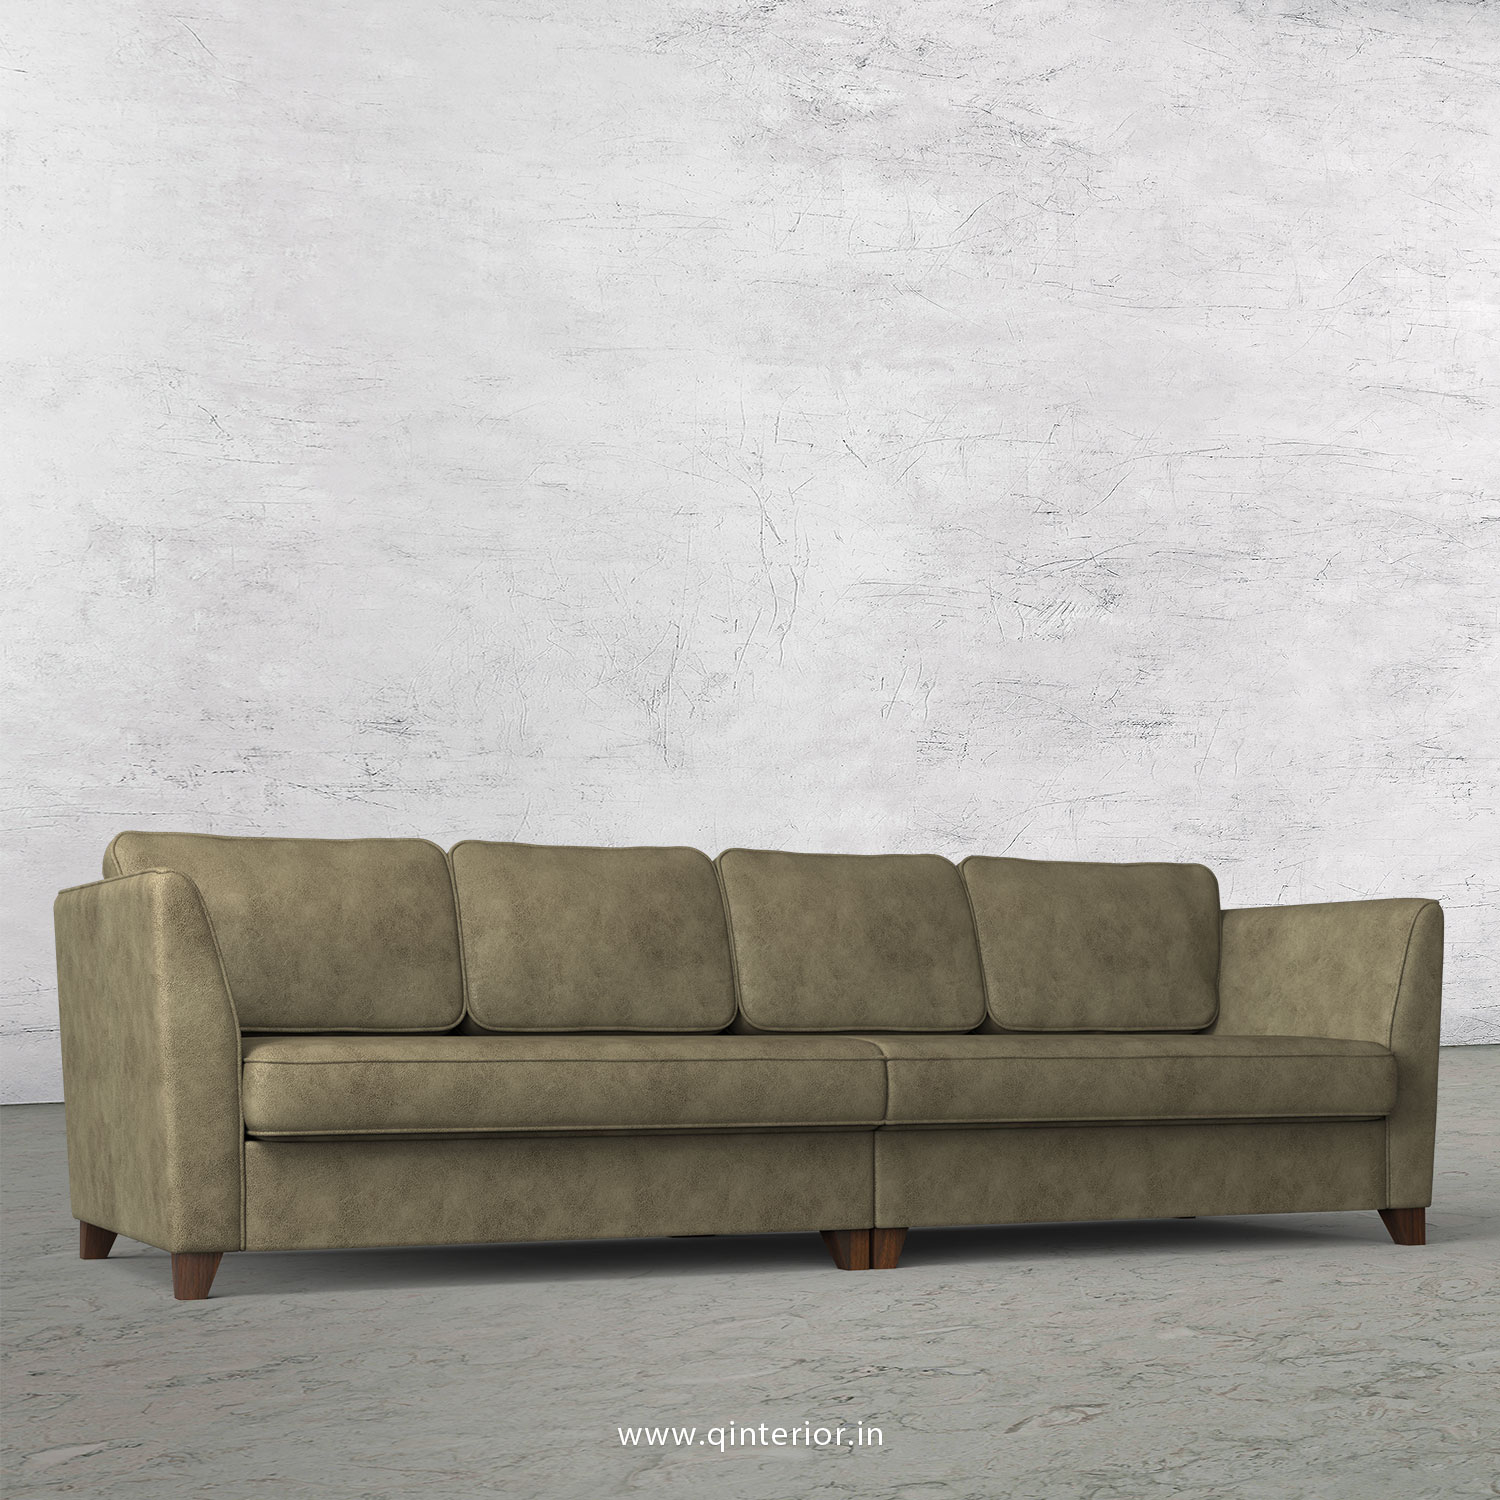 Kingstone 4 Seater Sofa in Fab Leather Fabric - SFA004 FL03